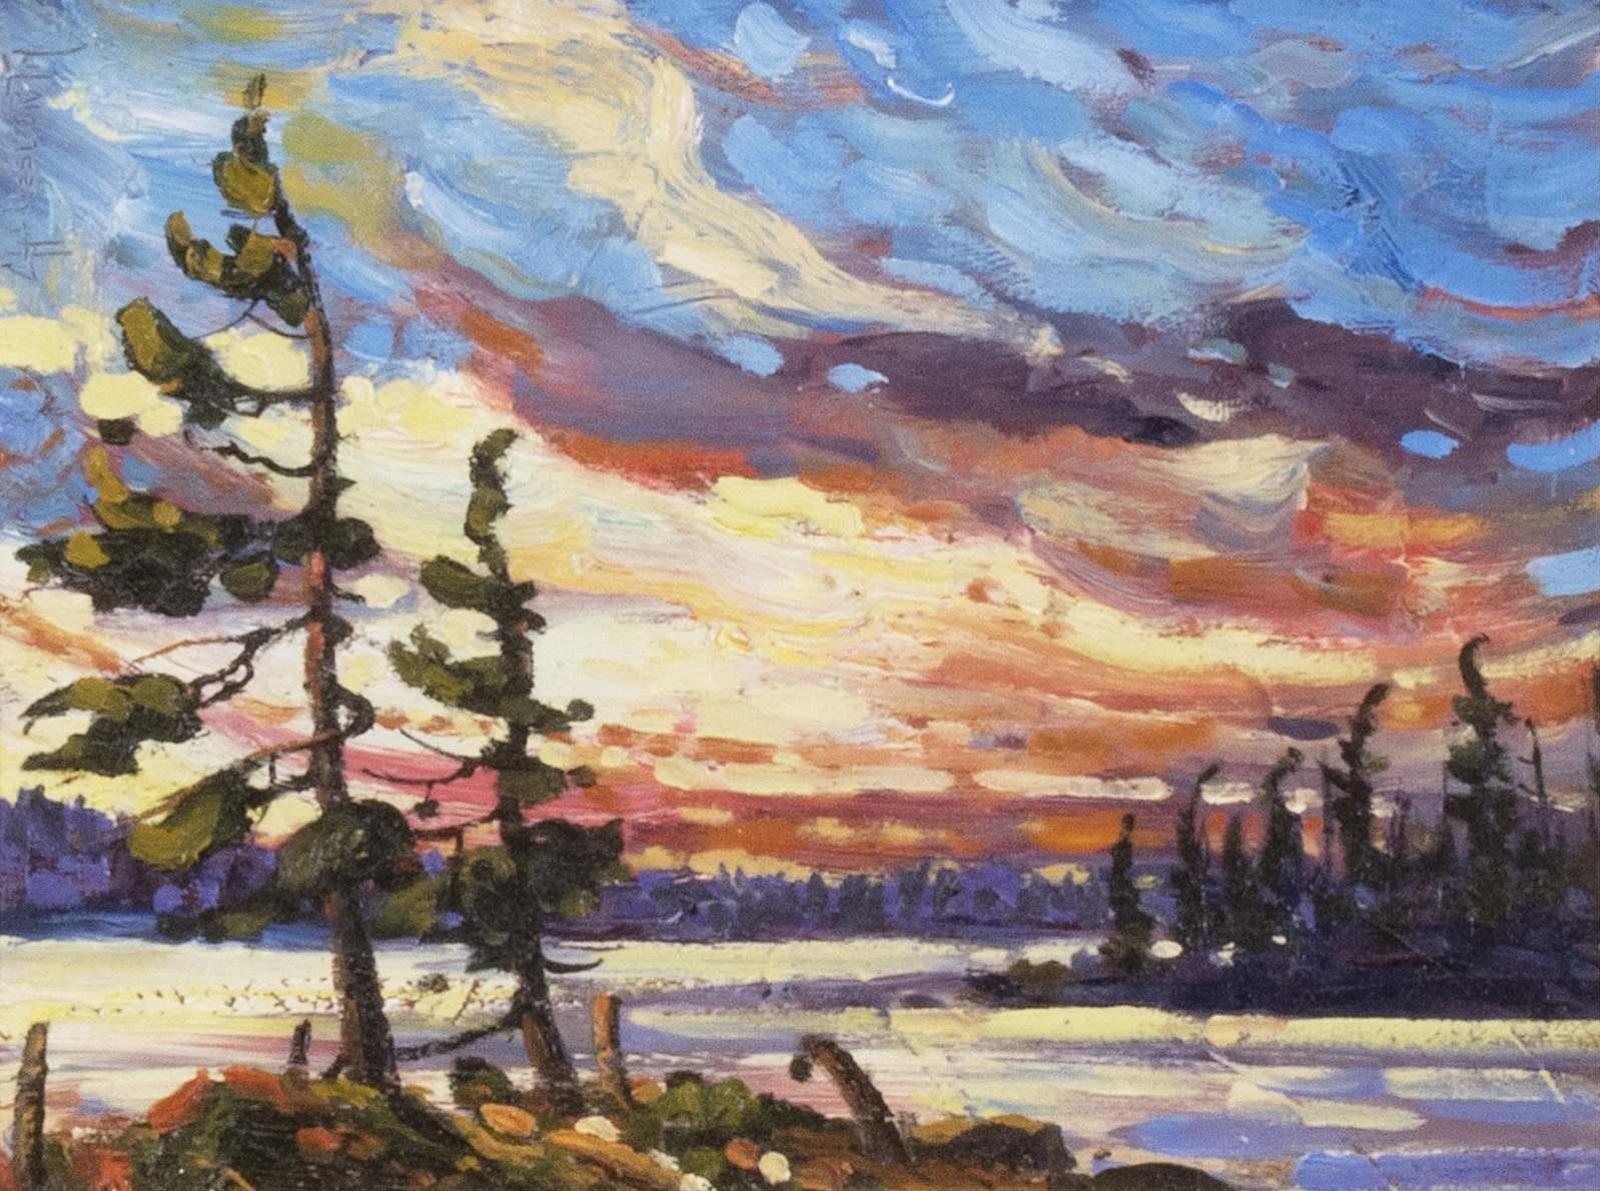 Rod Charlesworth (1955) - Evening Sky, N.W.T